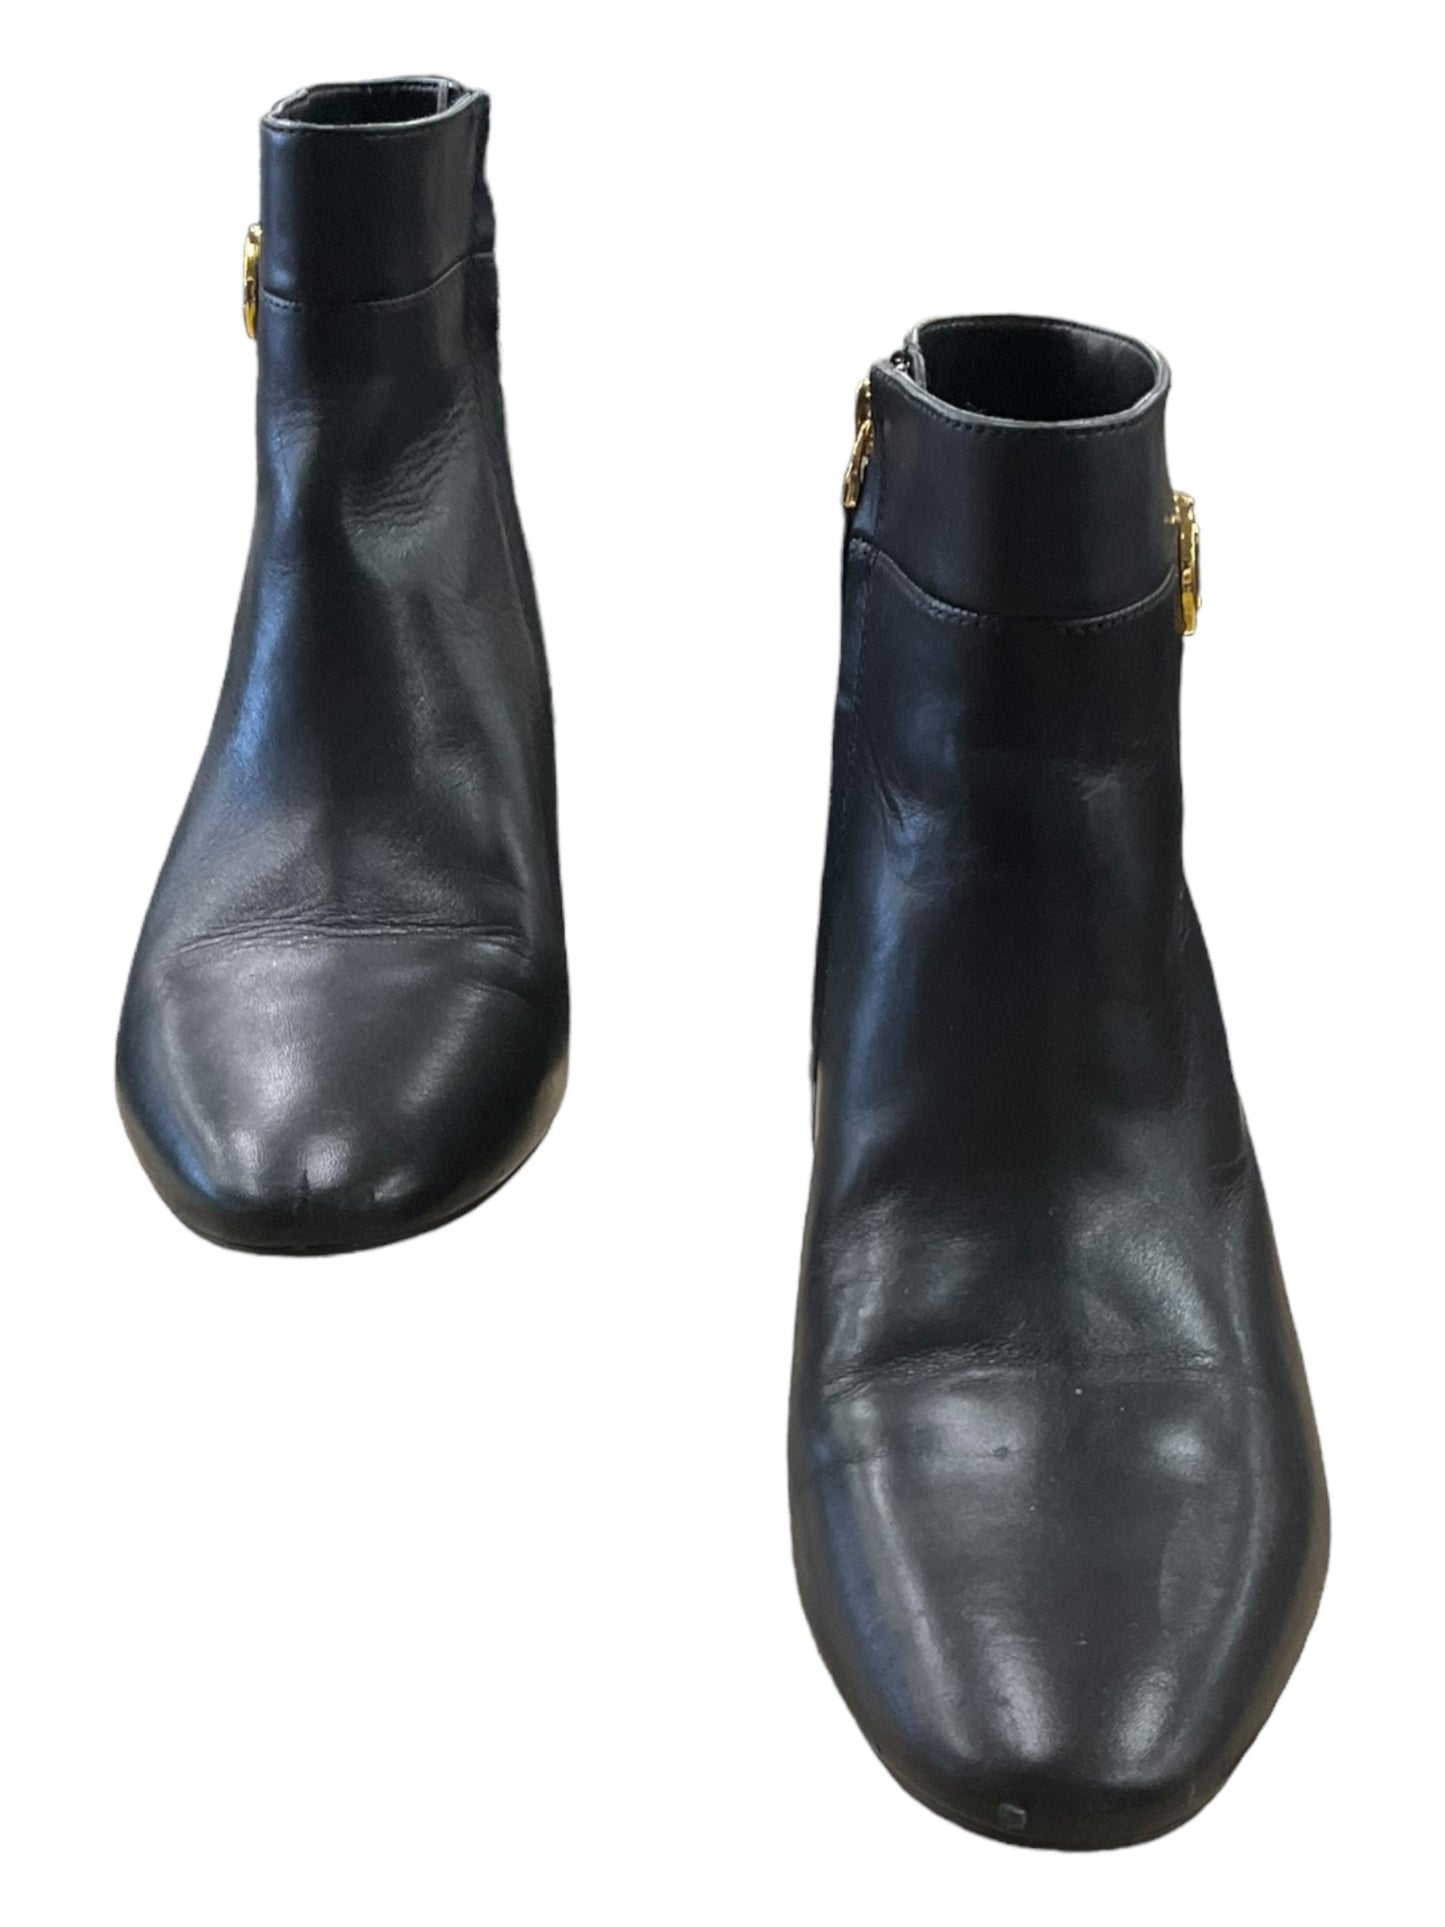 Boots Ankle Heels By Lauren By Ralph Lauren  Size: 9